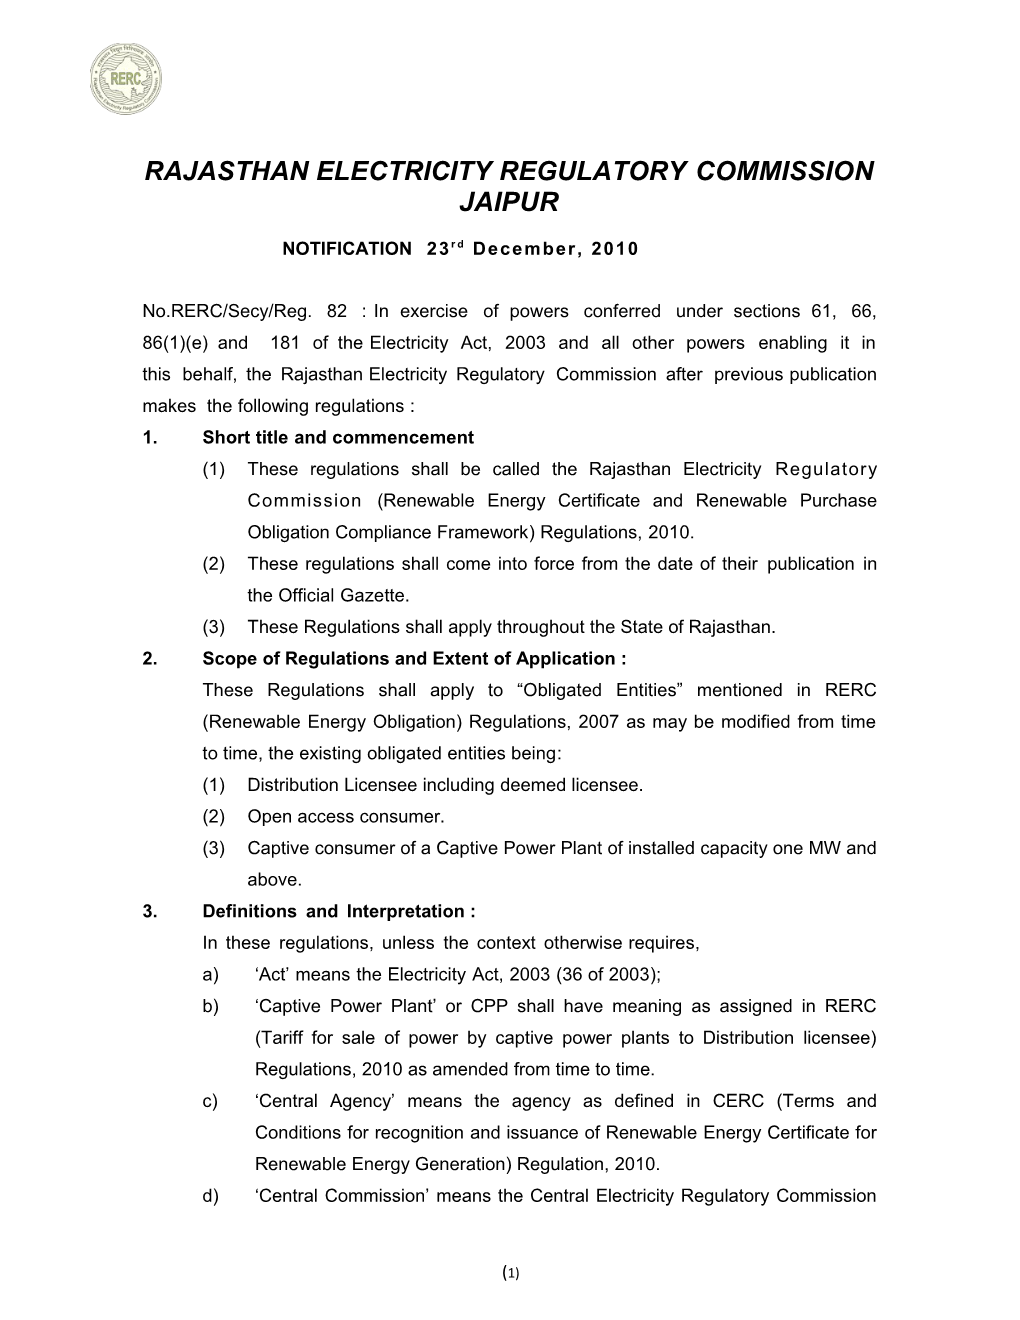 Rajasthan Electricity Regulatory Commission Jaipur